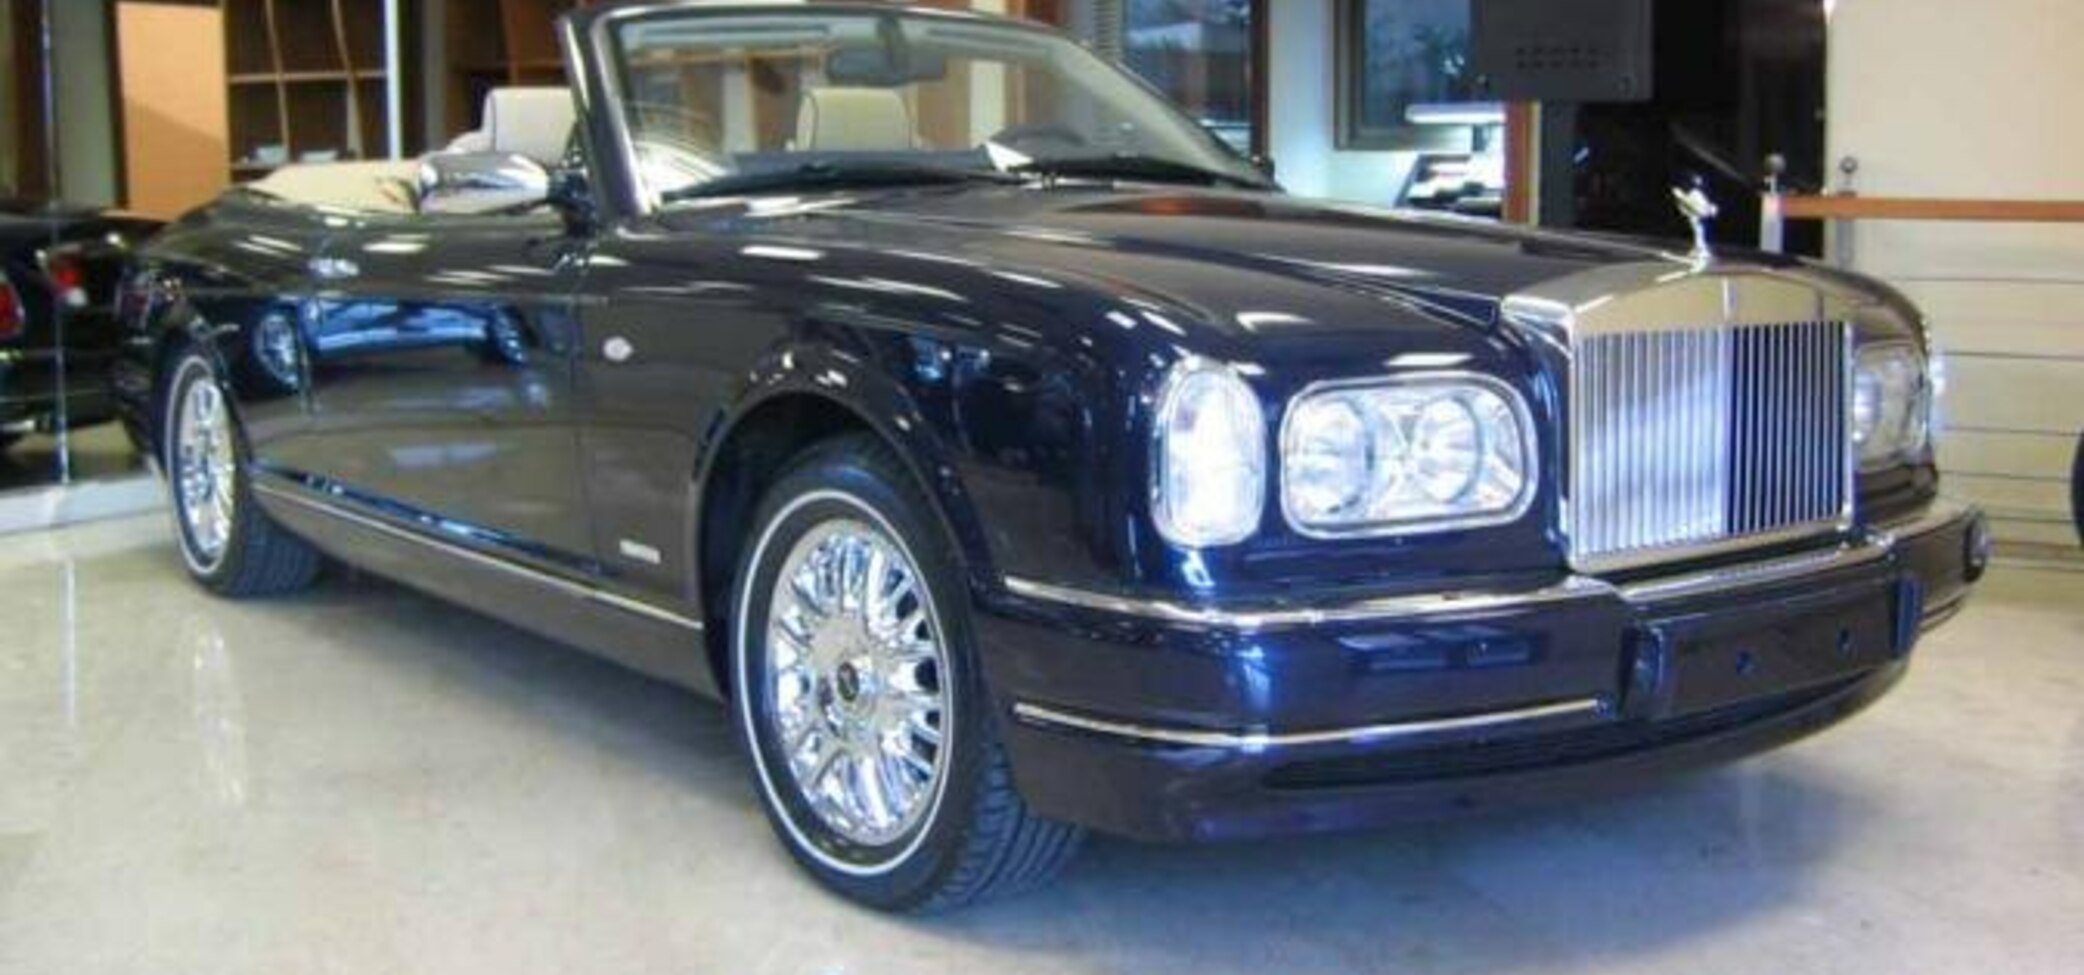 2001 Rolls Royce Corniche 68 169995